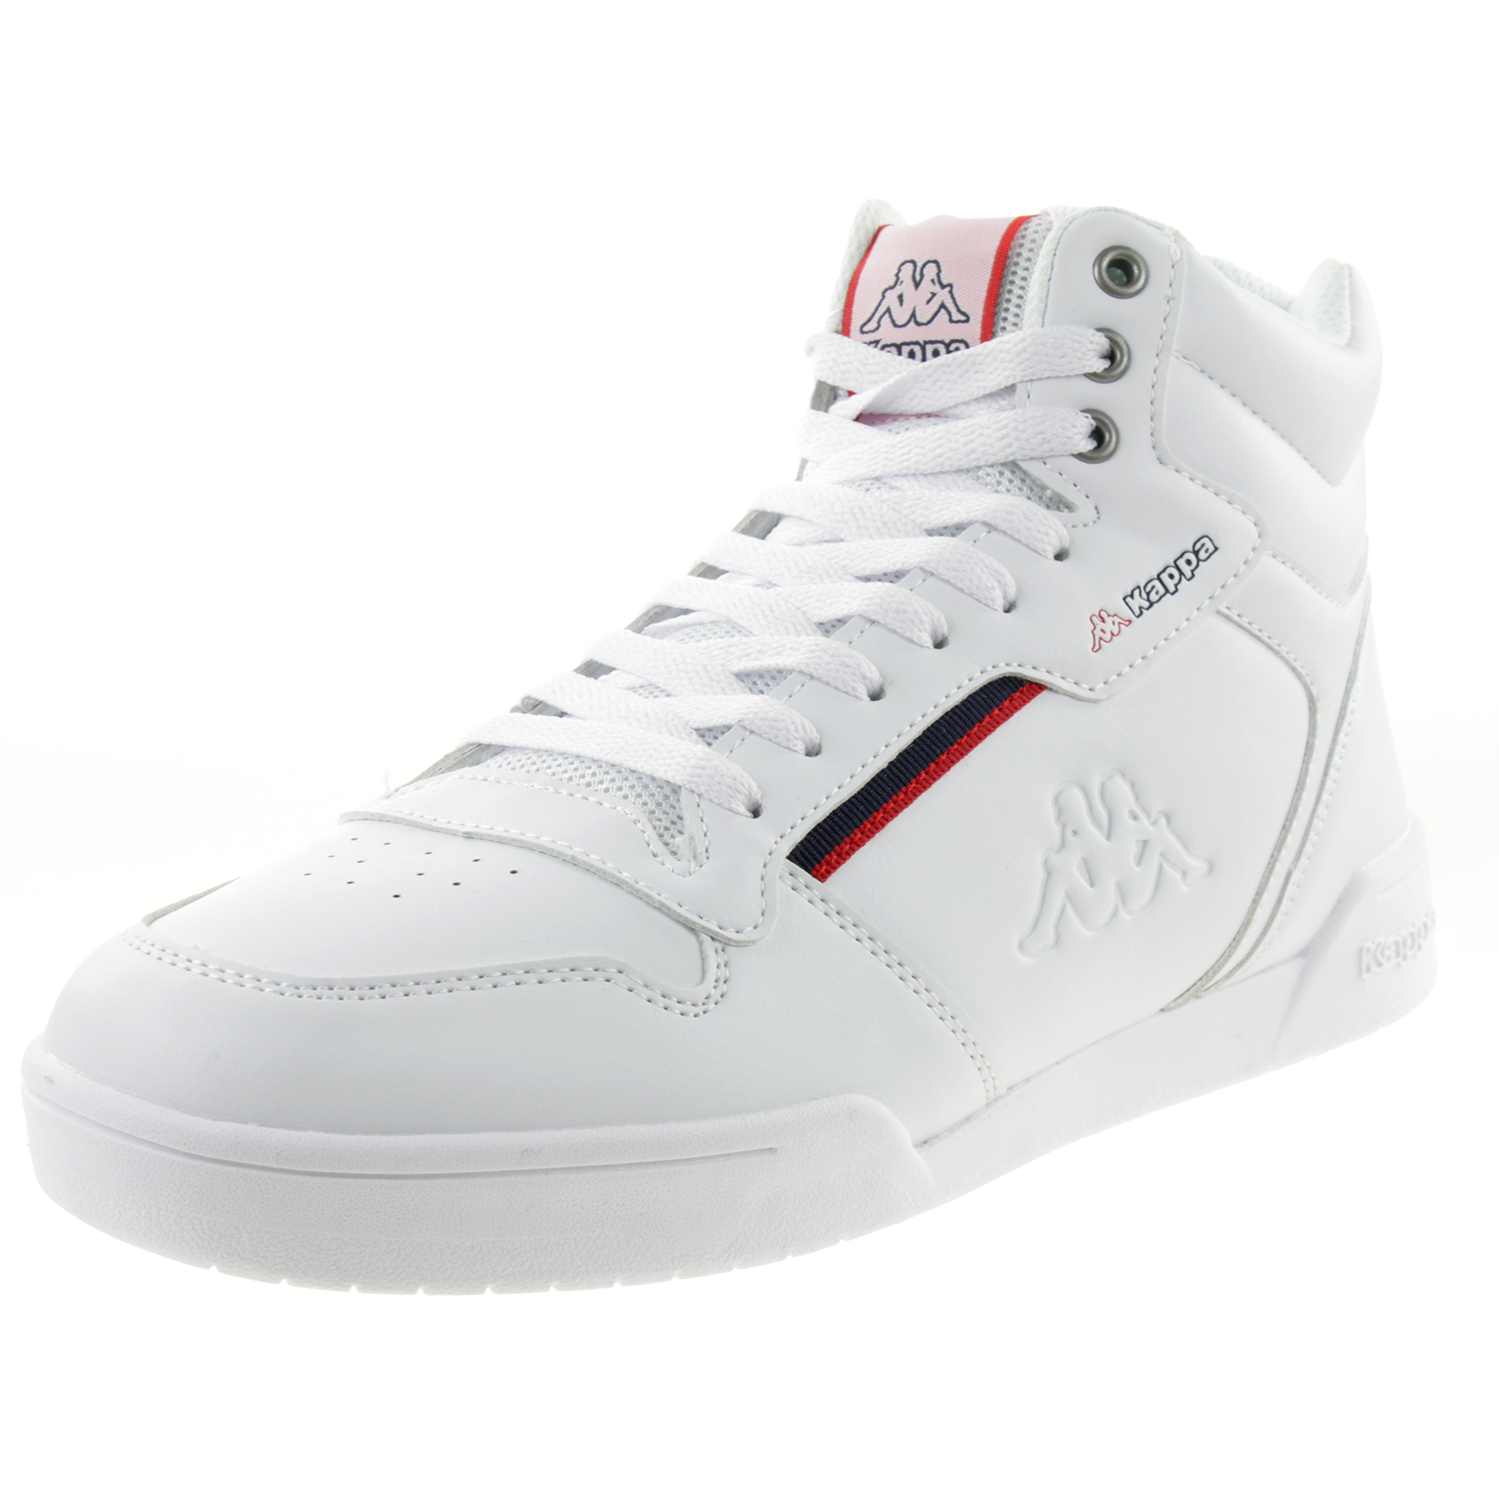 Kappa Unisex-Erwachsene Mangan Hohe Sneaker, Weiß (White 242764-1020), 41 EU